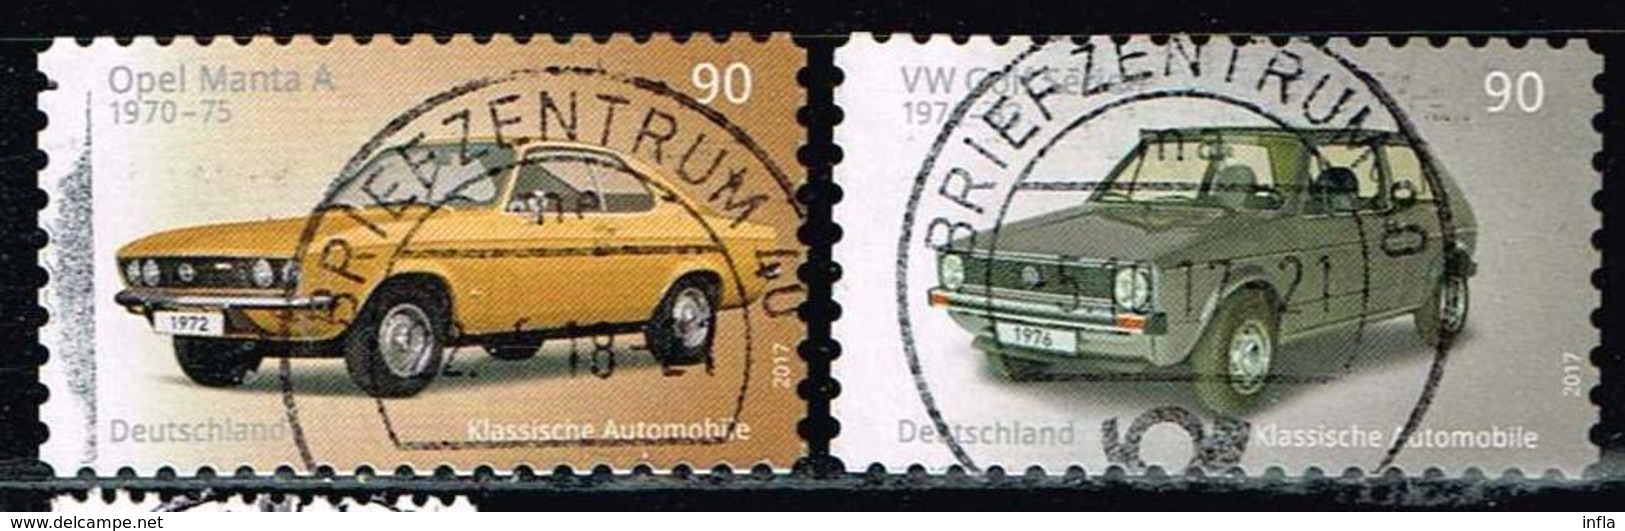 Bund 2017, Michel# 3301 - 3302 O Opel Manta Und VW Golf, Selbstklebend, Self-adhesive - Gebraucht